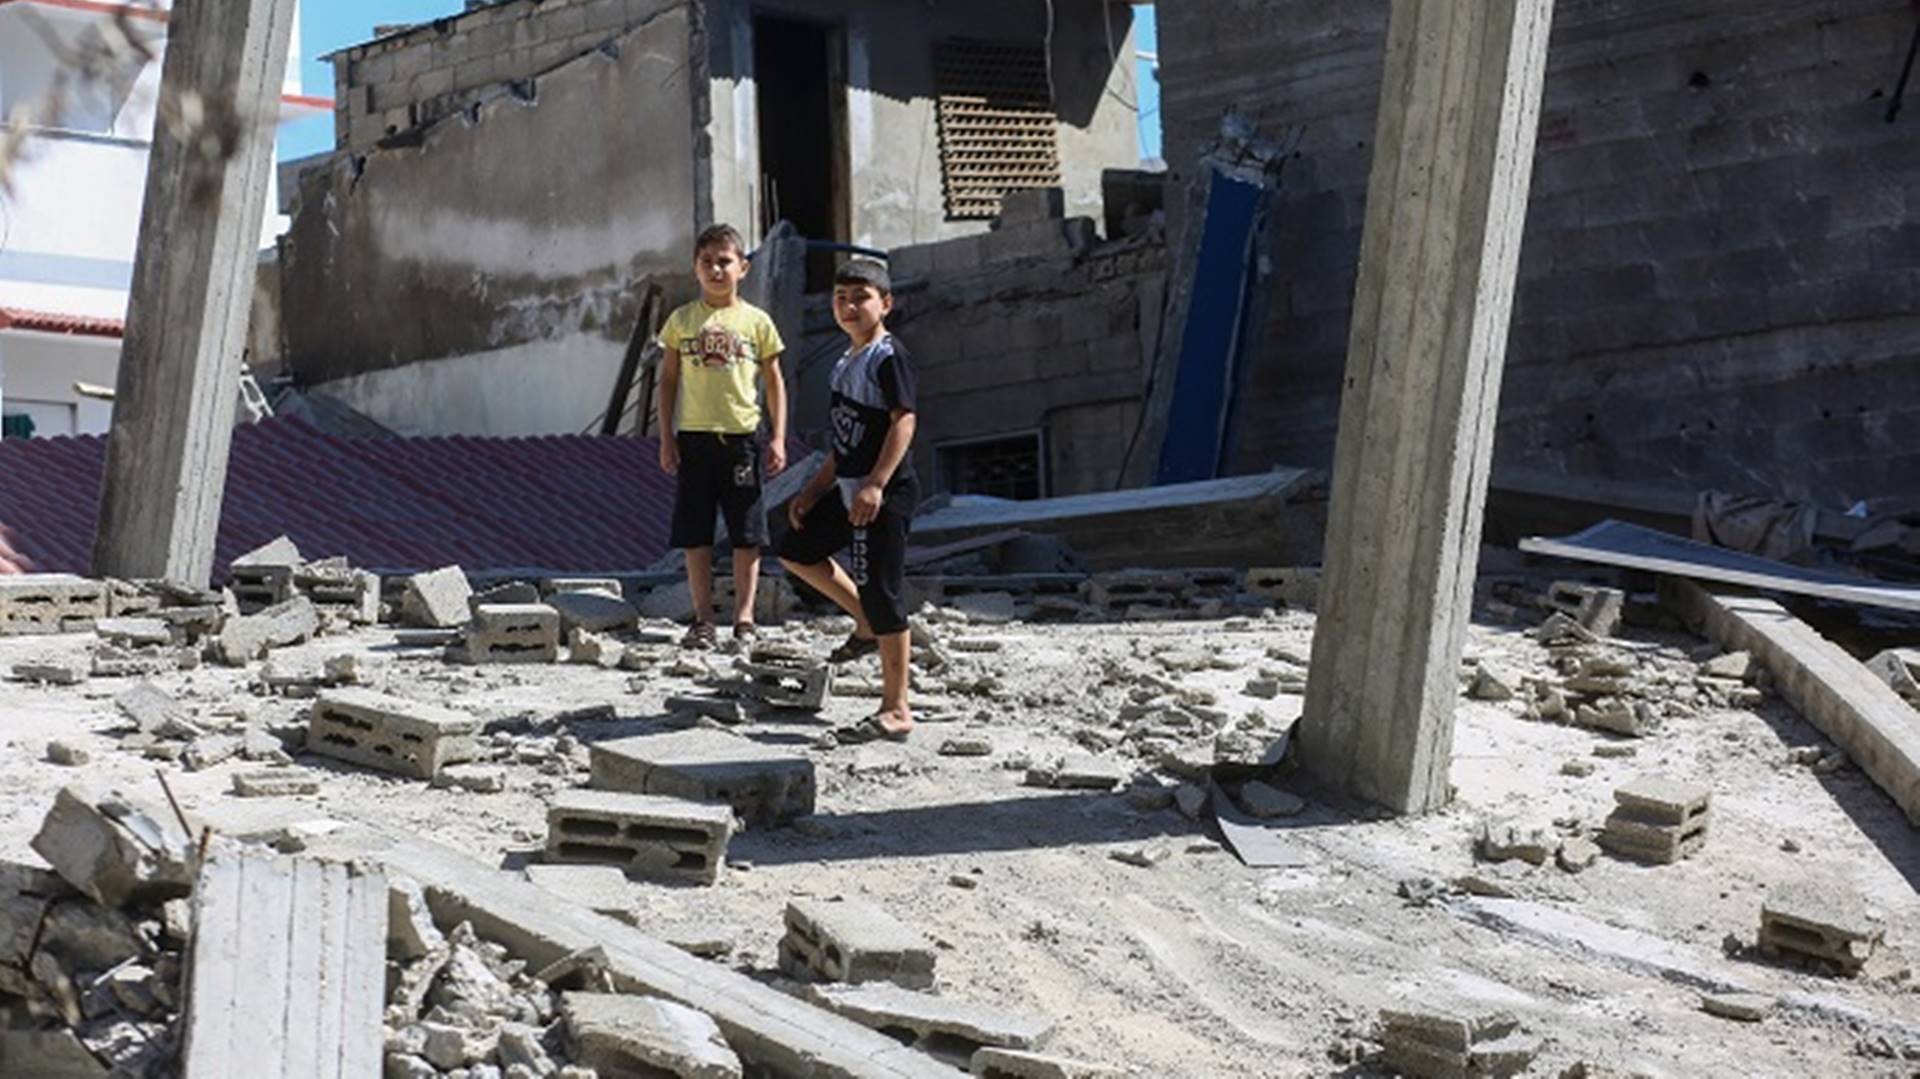 Finland grants €1m for Palestinians in Gaza